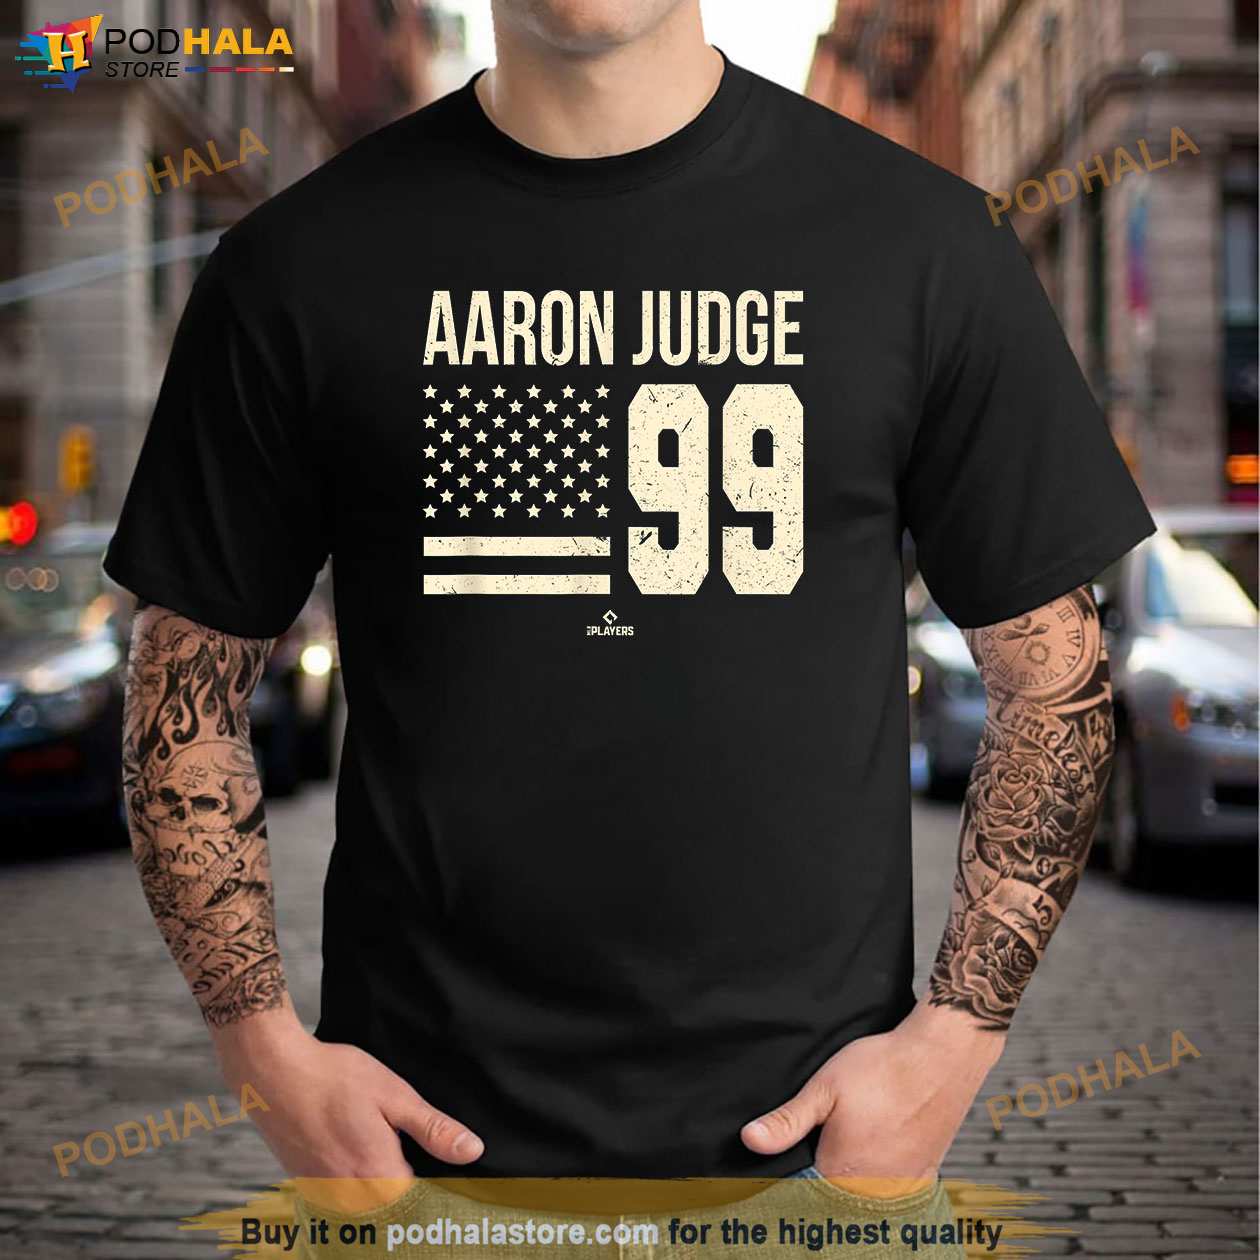 aaron judge youth shirt